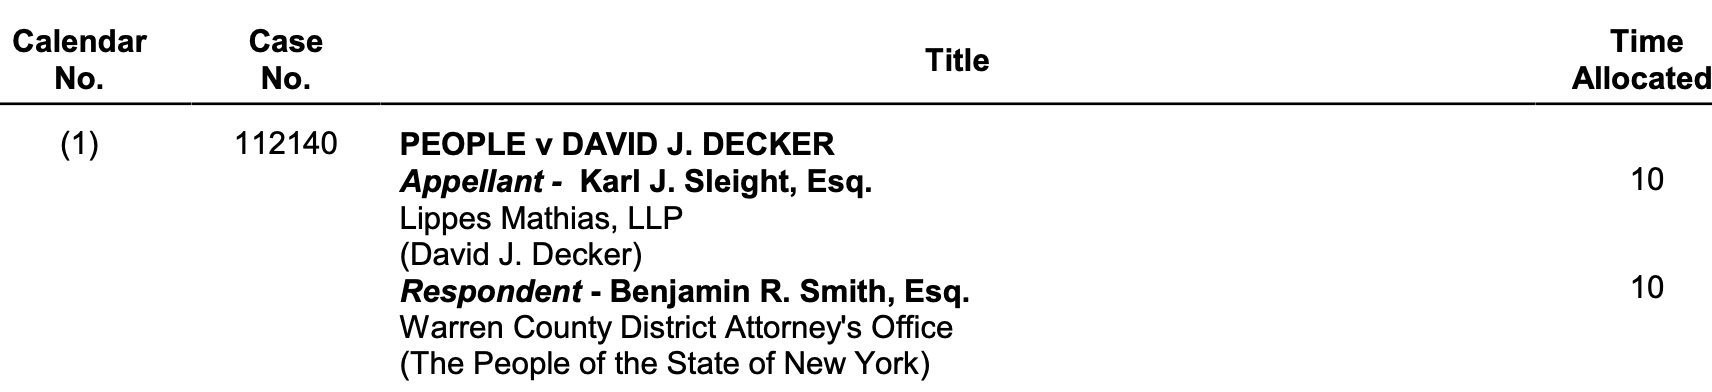 AD3 court calendar showing David J. Decker's case